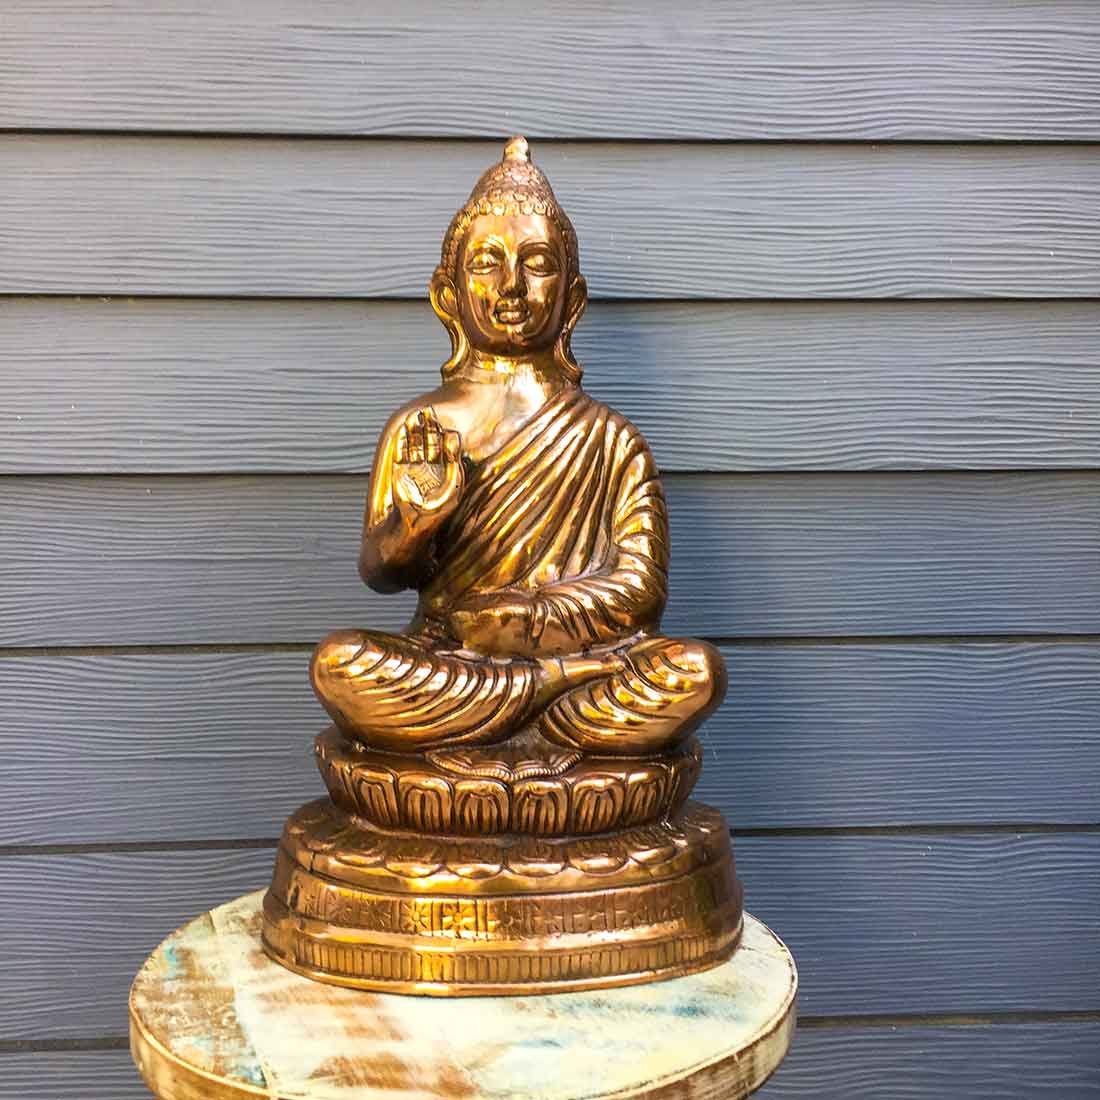 Meditating Buddha Statue - for Peace and Harmony - 20 Inch - ApkaMart